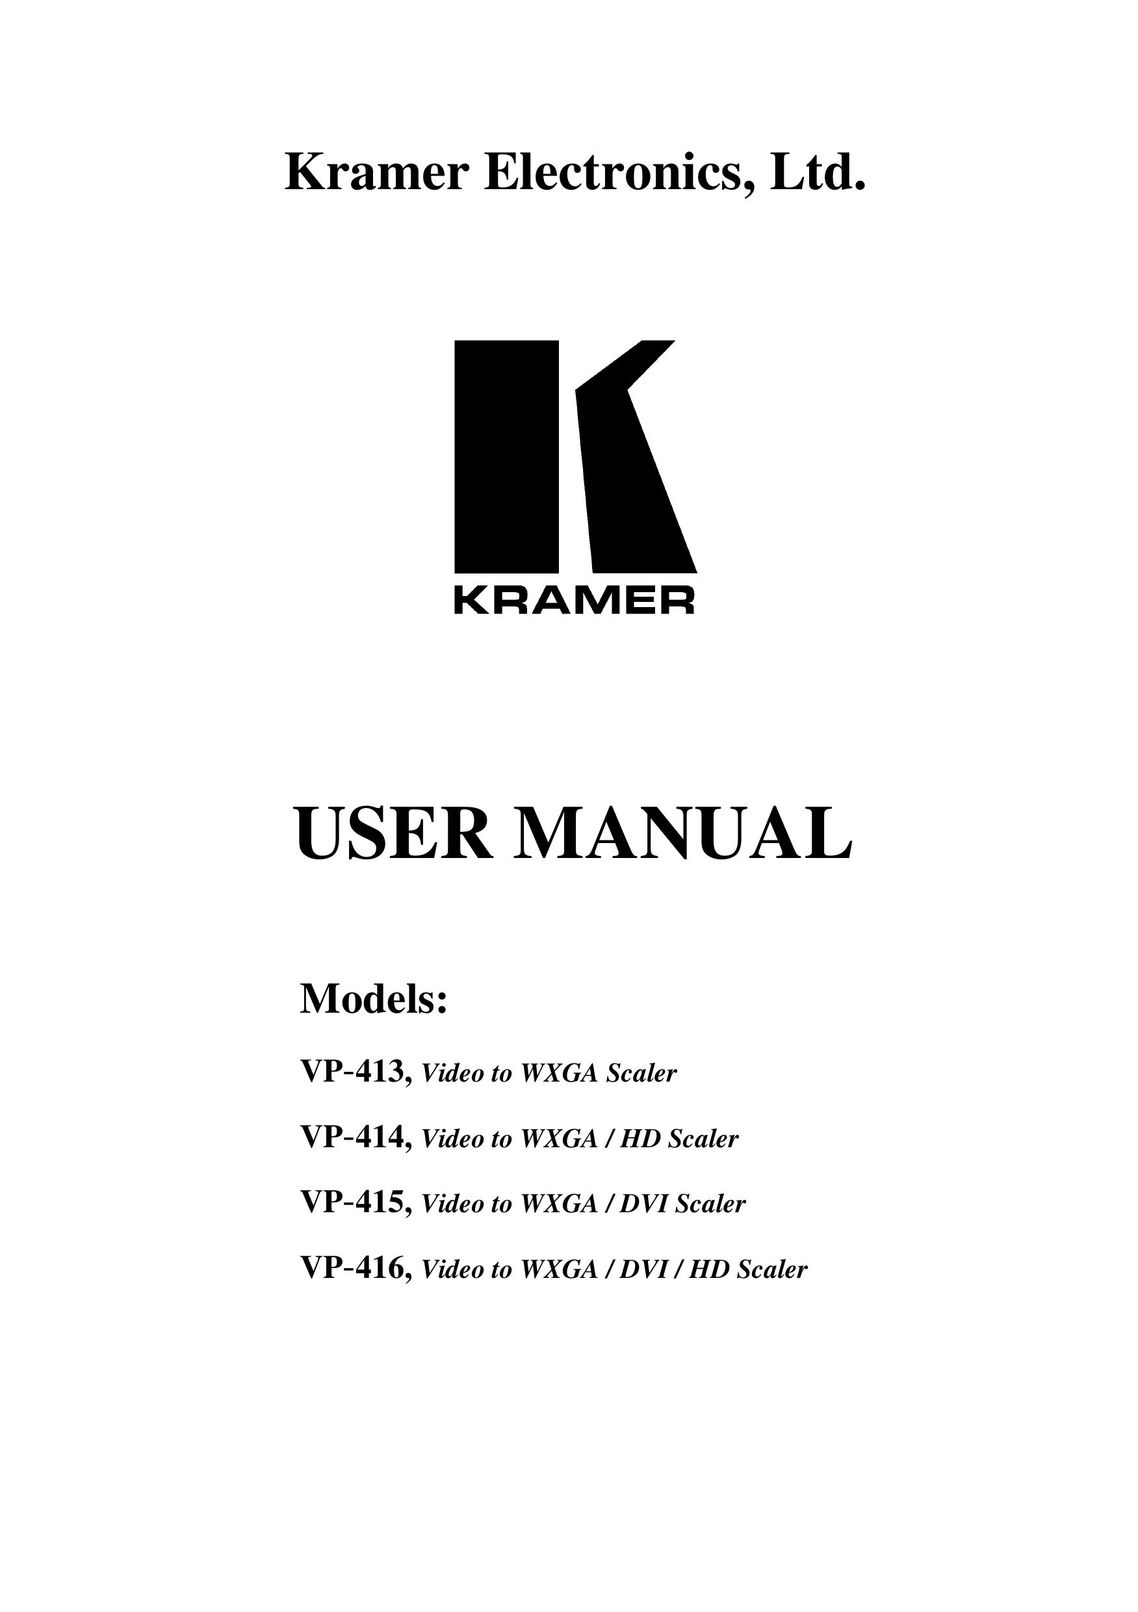 Kramer Electronics VP-413 TV Video Accessories User Manual